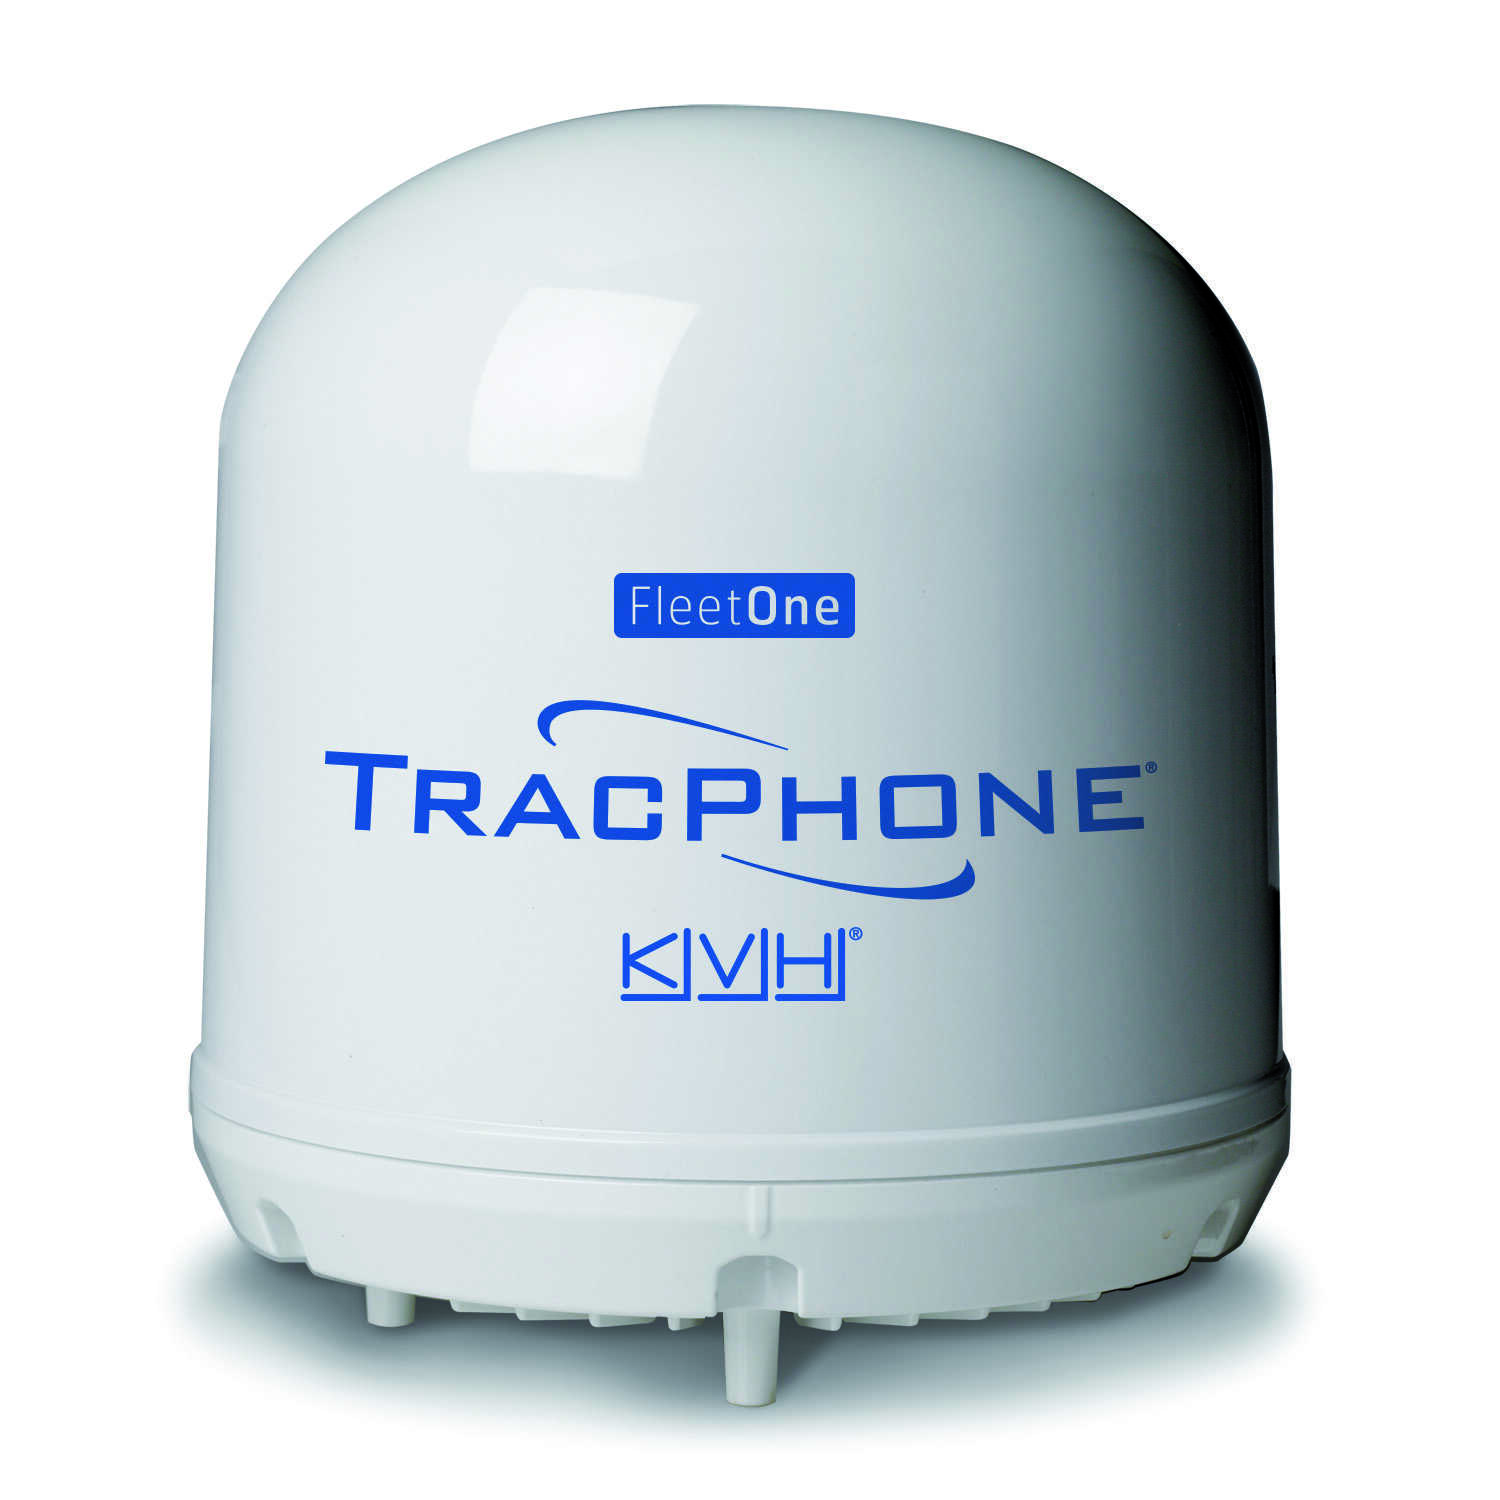 KVH TracPhone Fleet ONE